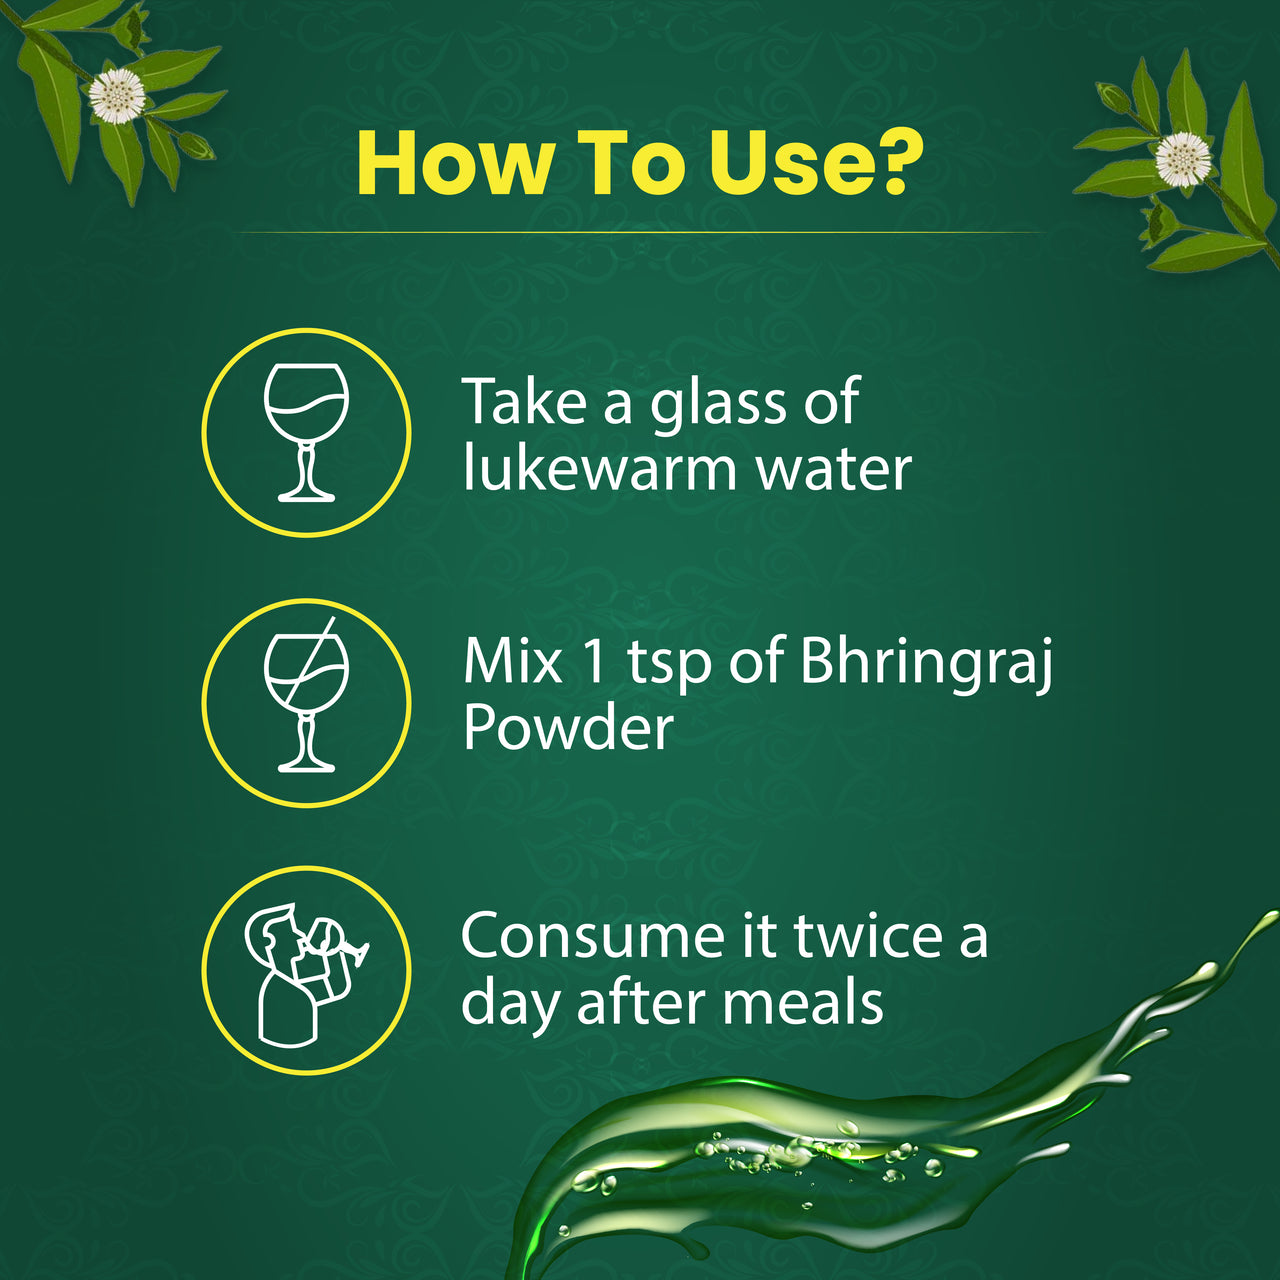 How to use Bhringraj Powder